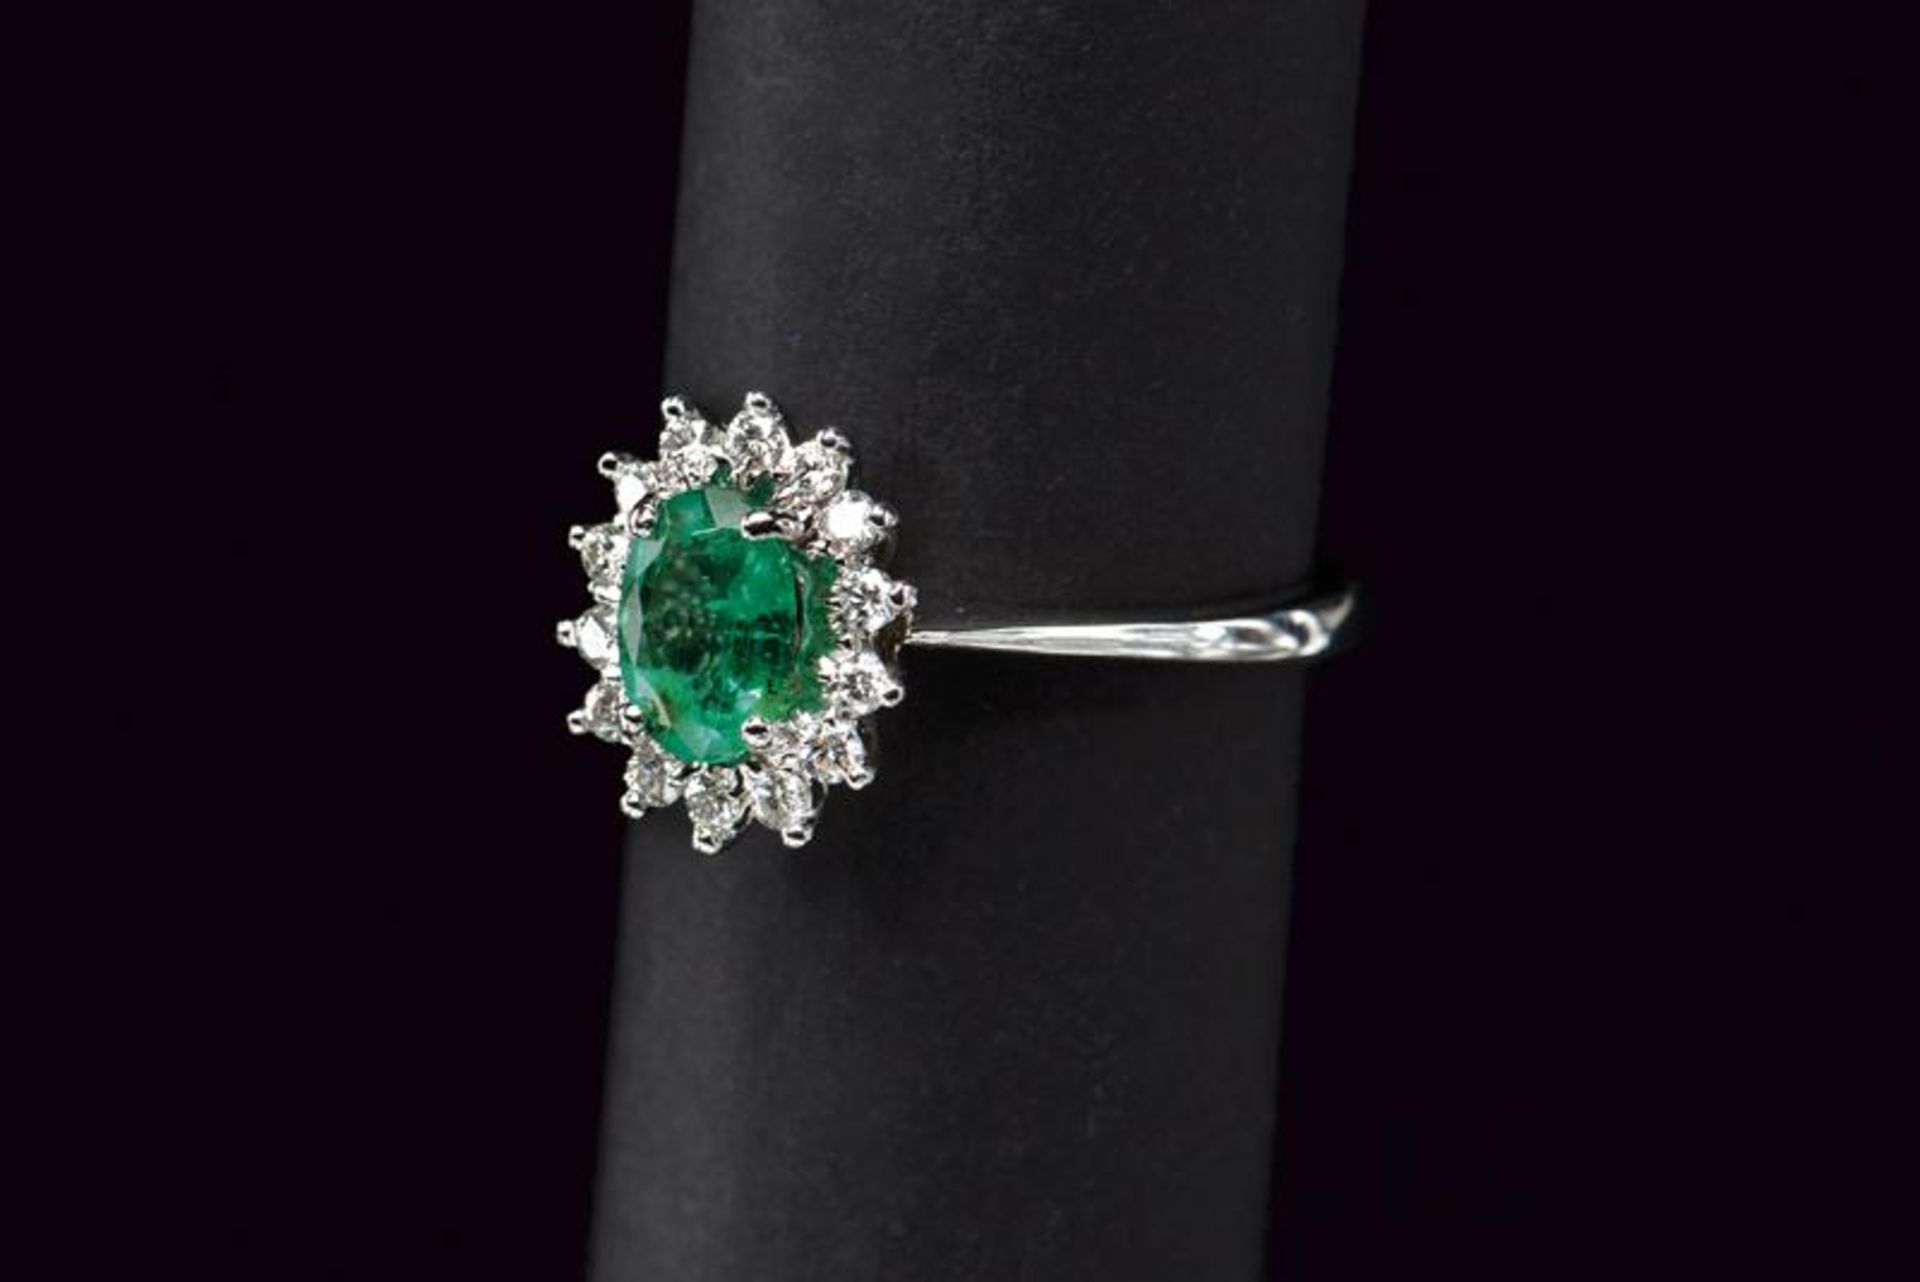 MV white gold oval emerald ring with diamond surround